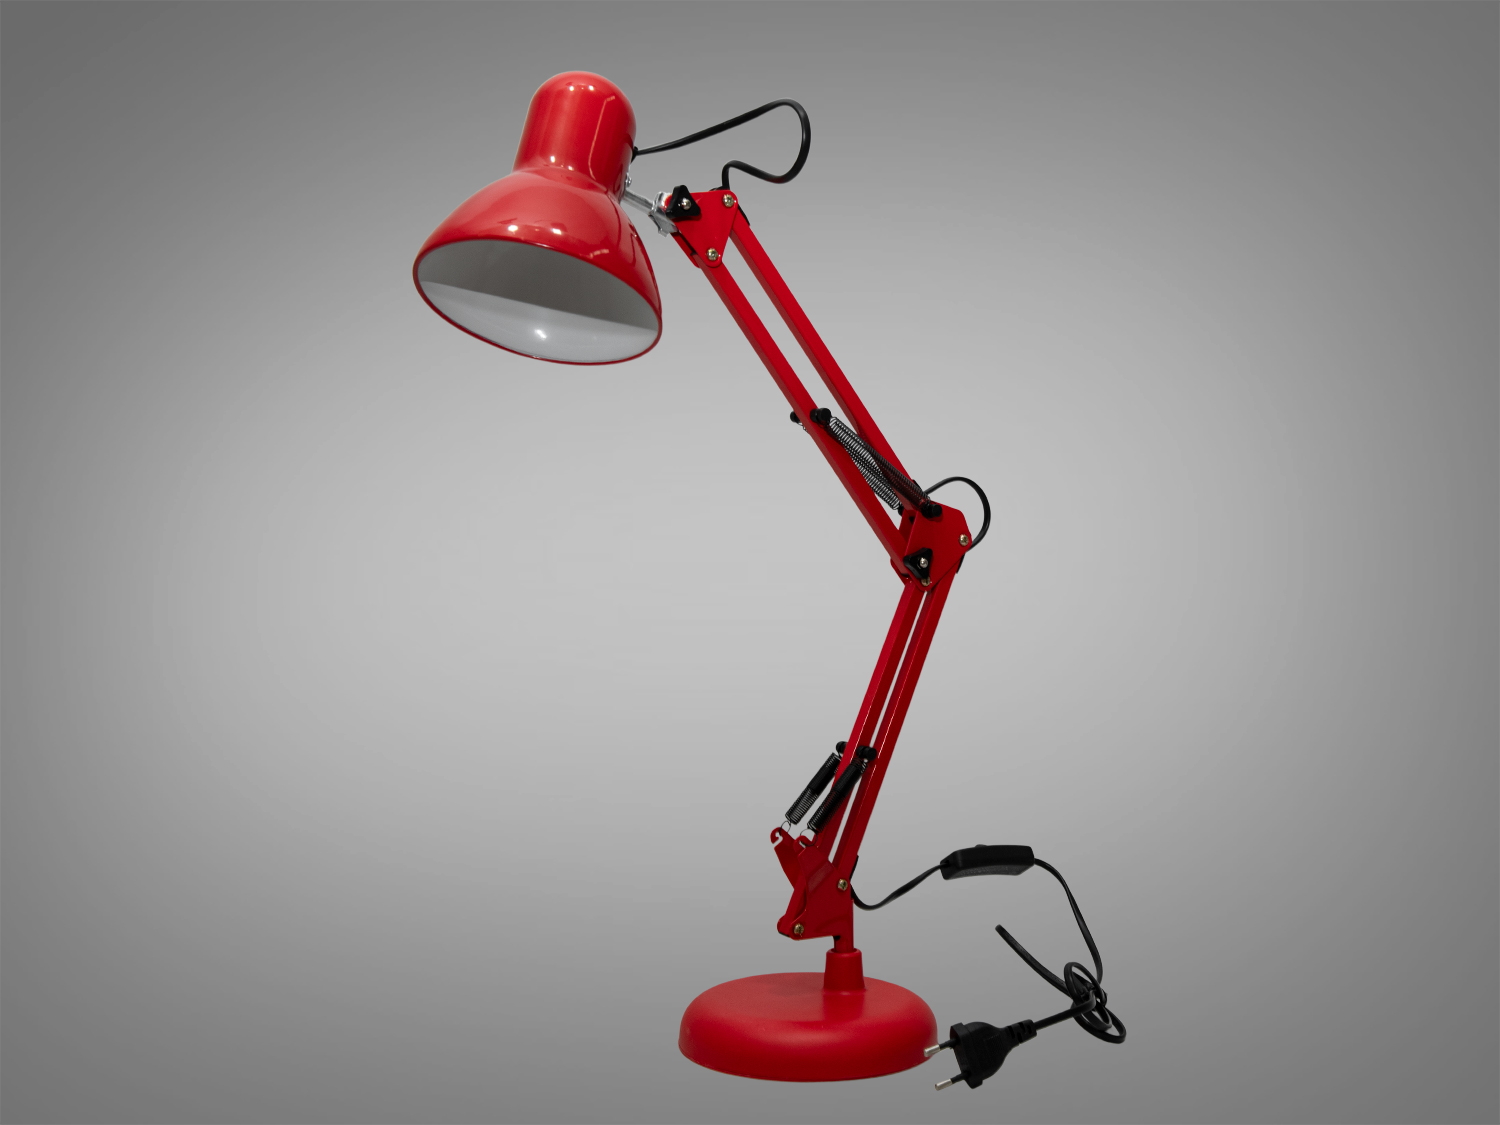 Настільна офісна лампа в стилі ролика кіностудії Pixar, червона лампаНастольные лампы, Новинки